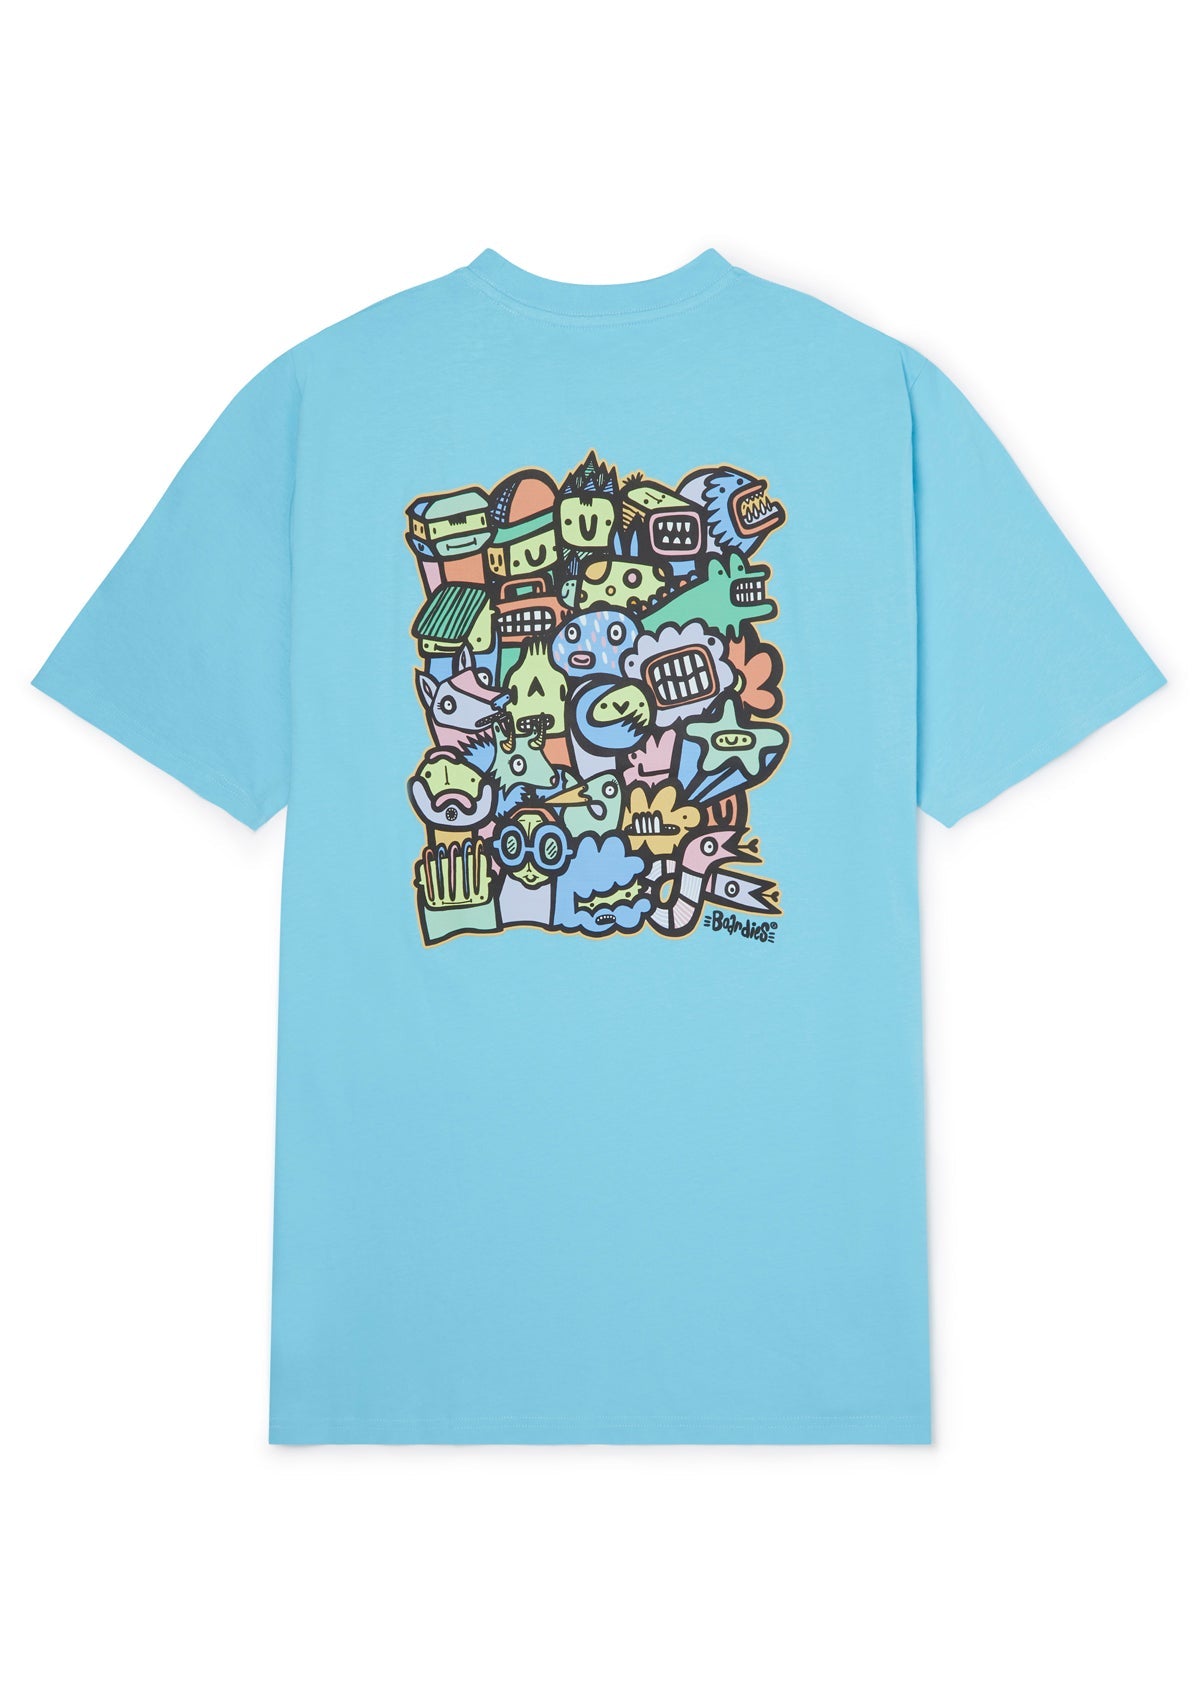 Monsters T-Shirt